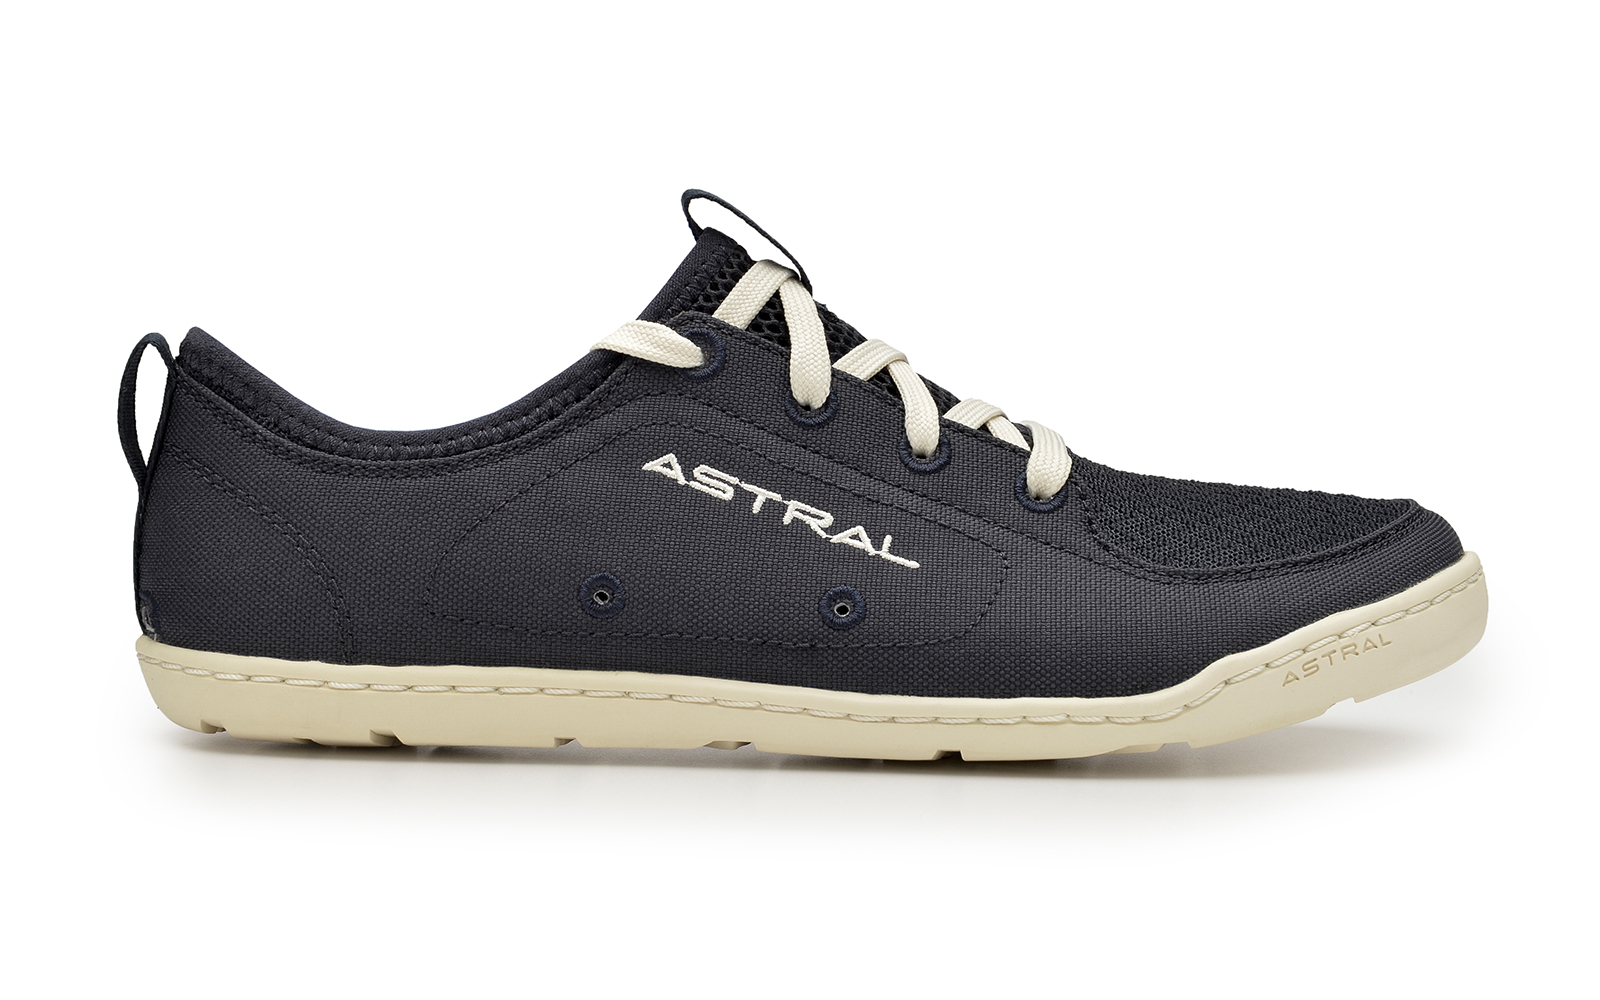 astral kayaking shoes